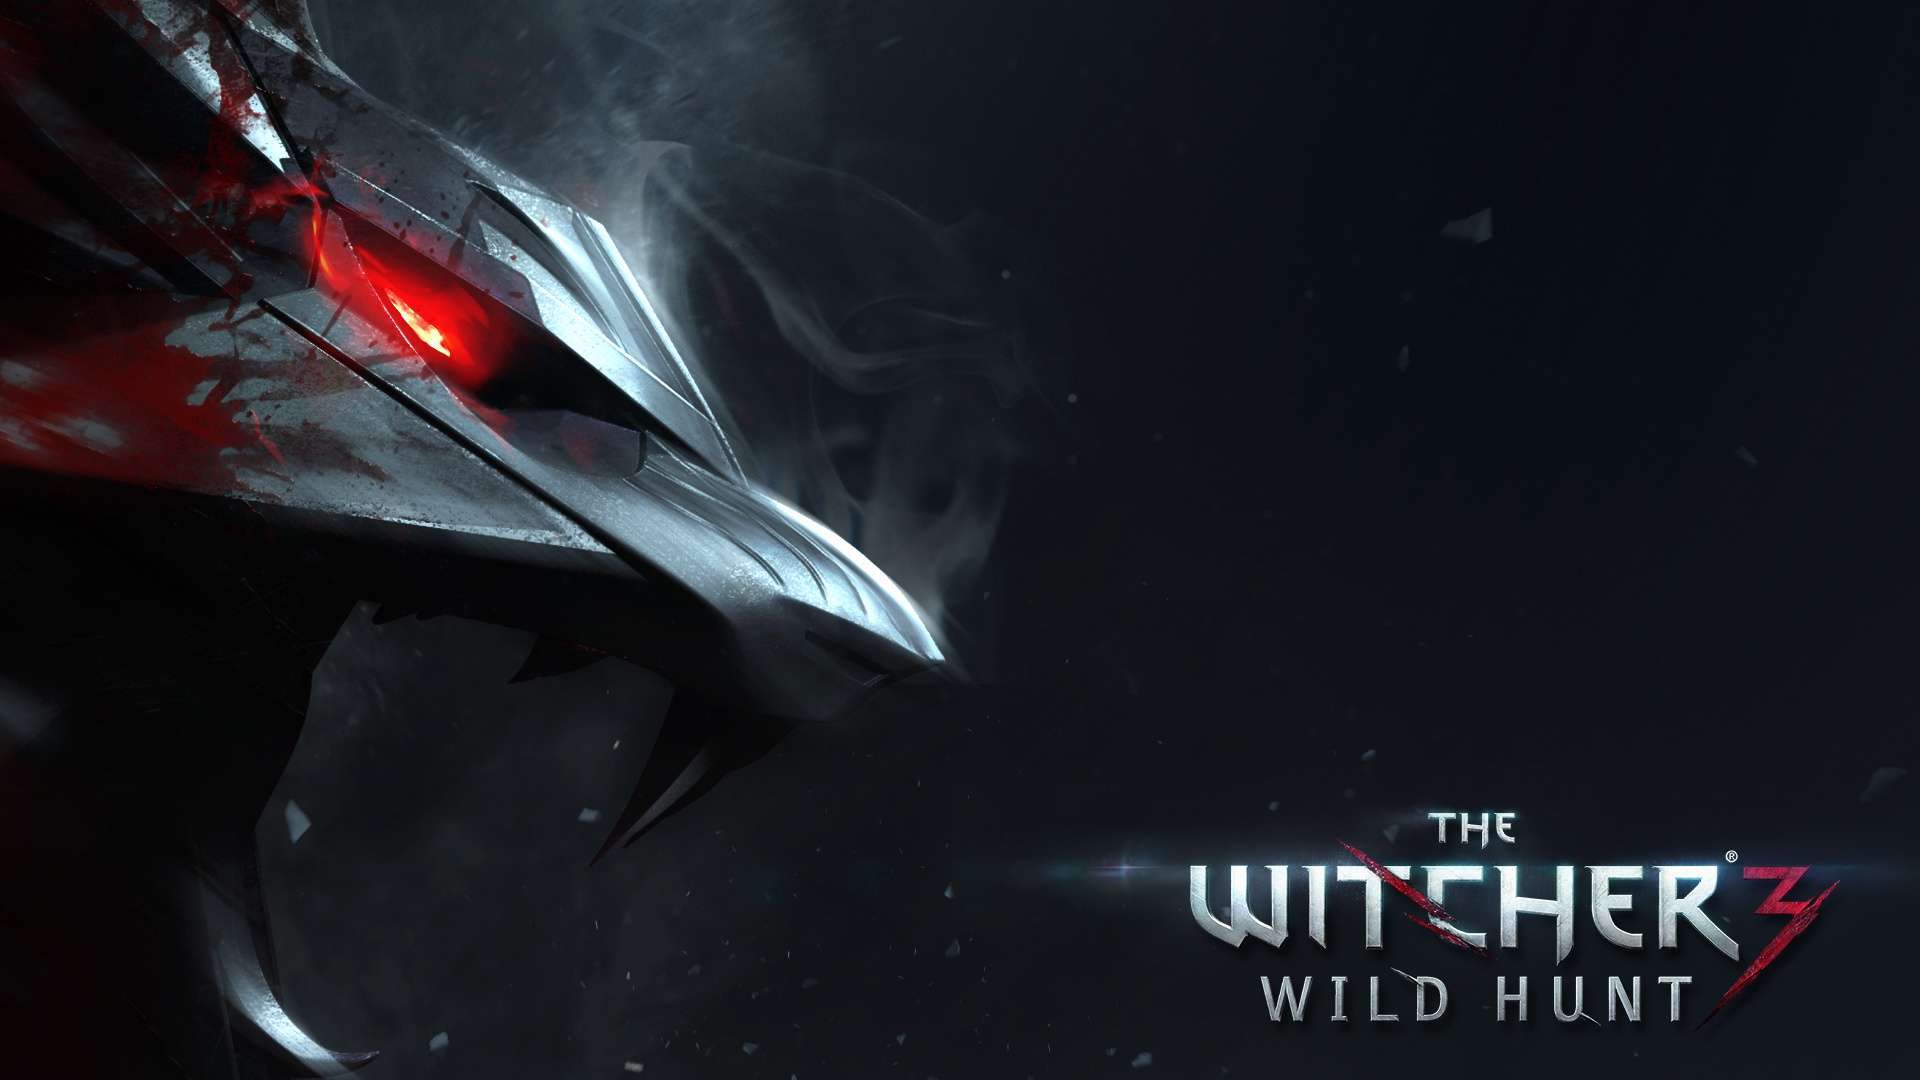 The Witcher Wild Hunt HD Wallpaper 1080p HDwallwide